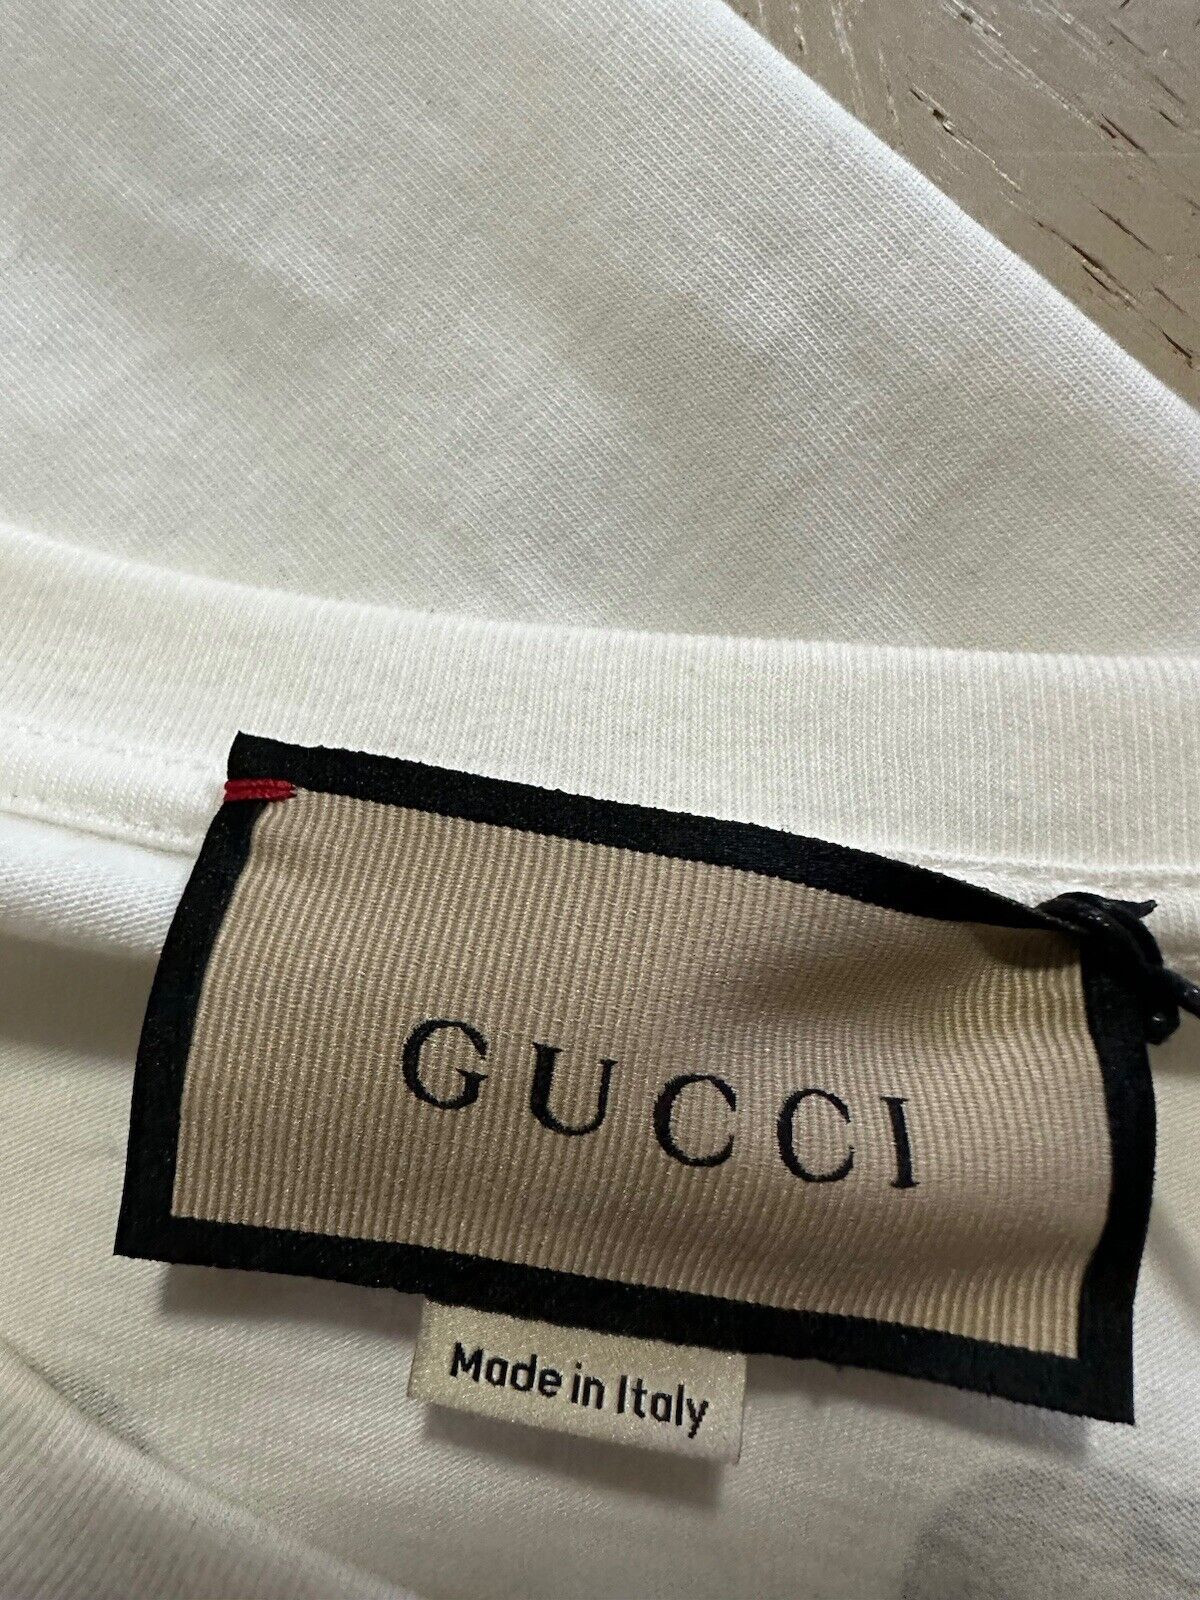 New $890 Gucci Women Short Sleeve Heavy Cotton Jersey T Shirt White Size S